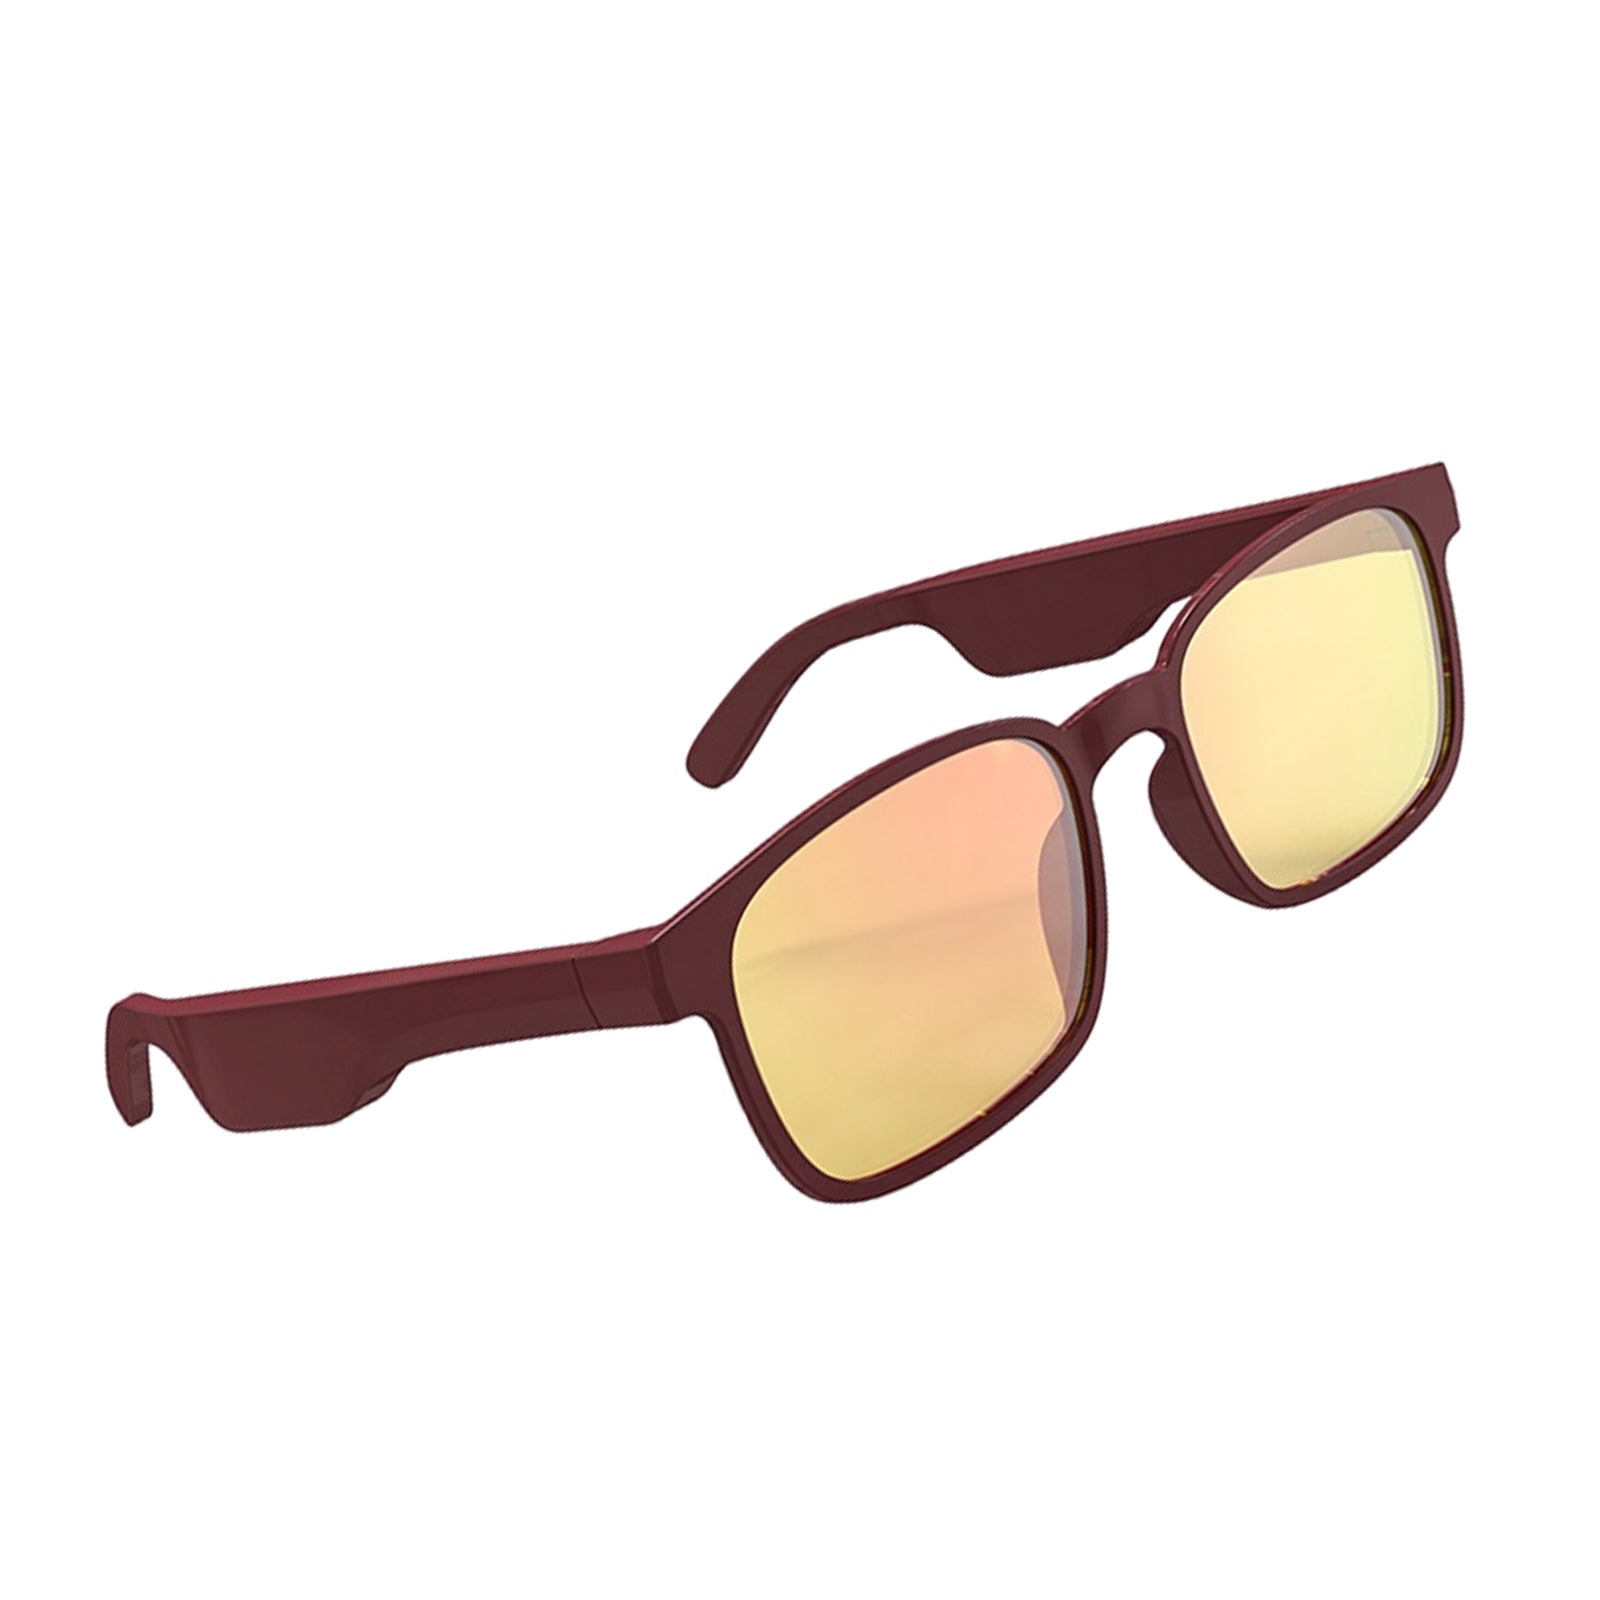 Bluetooth Sunglasses Stereo Headphones Smart Glasses Brown Round